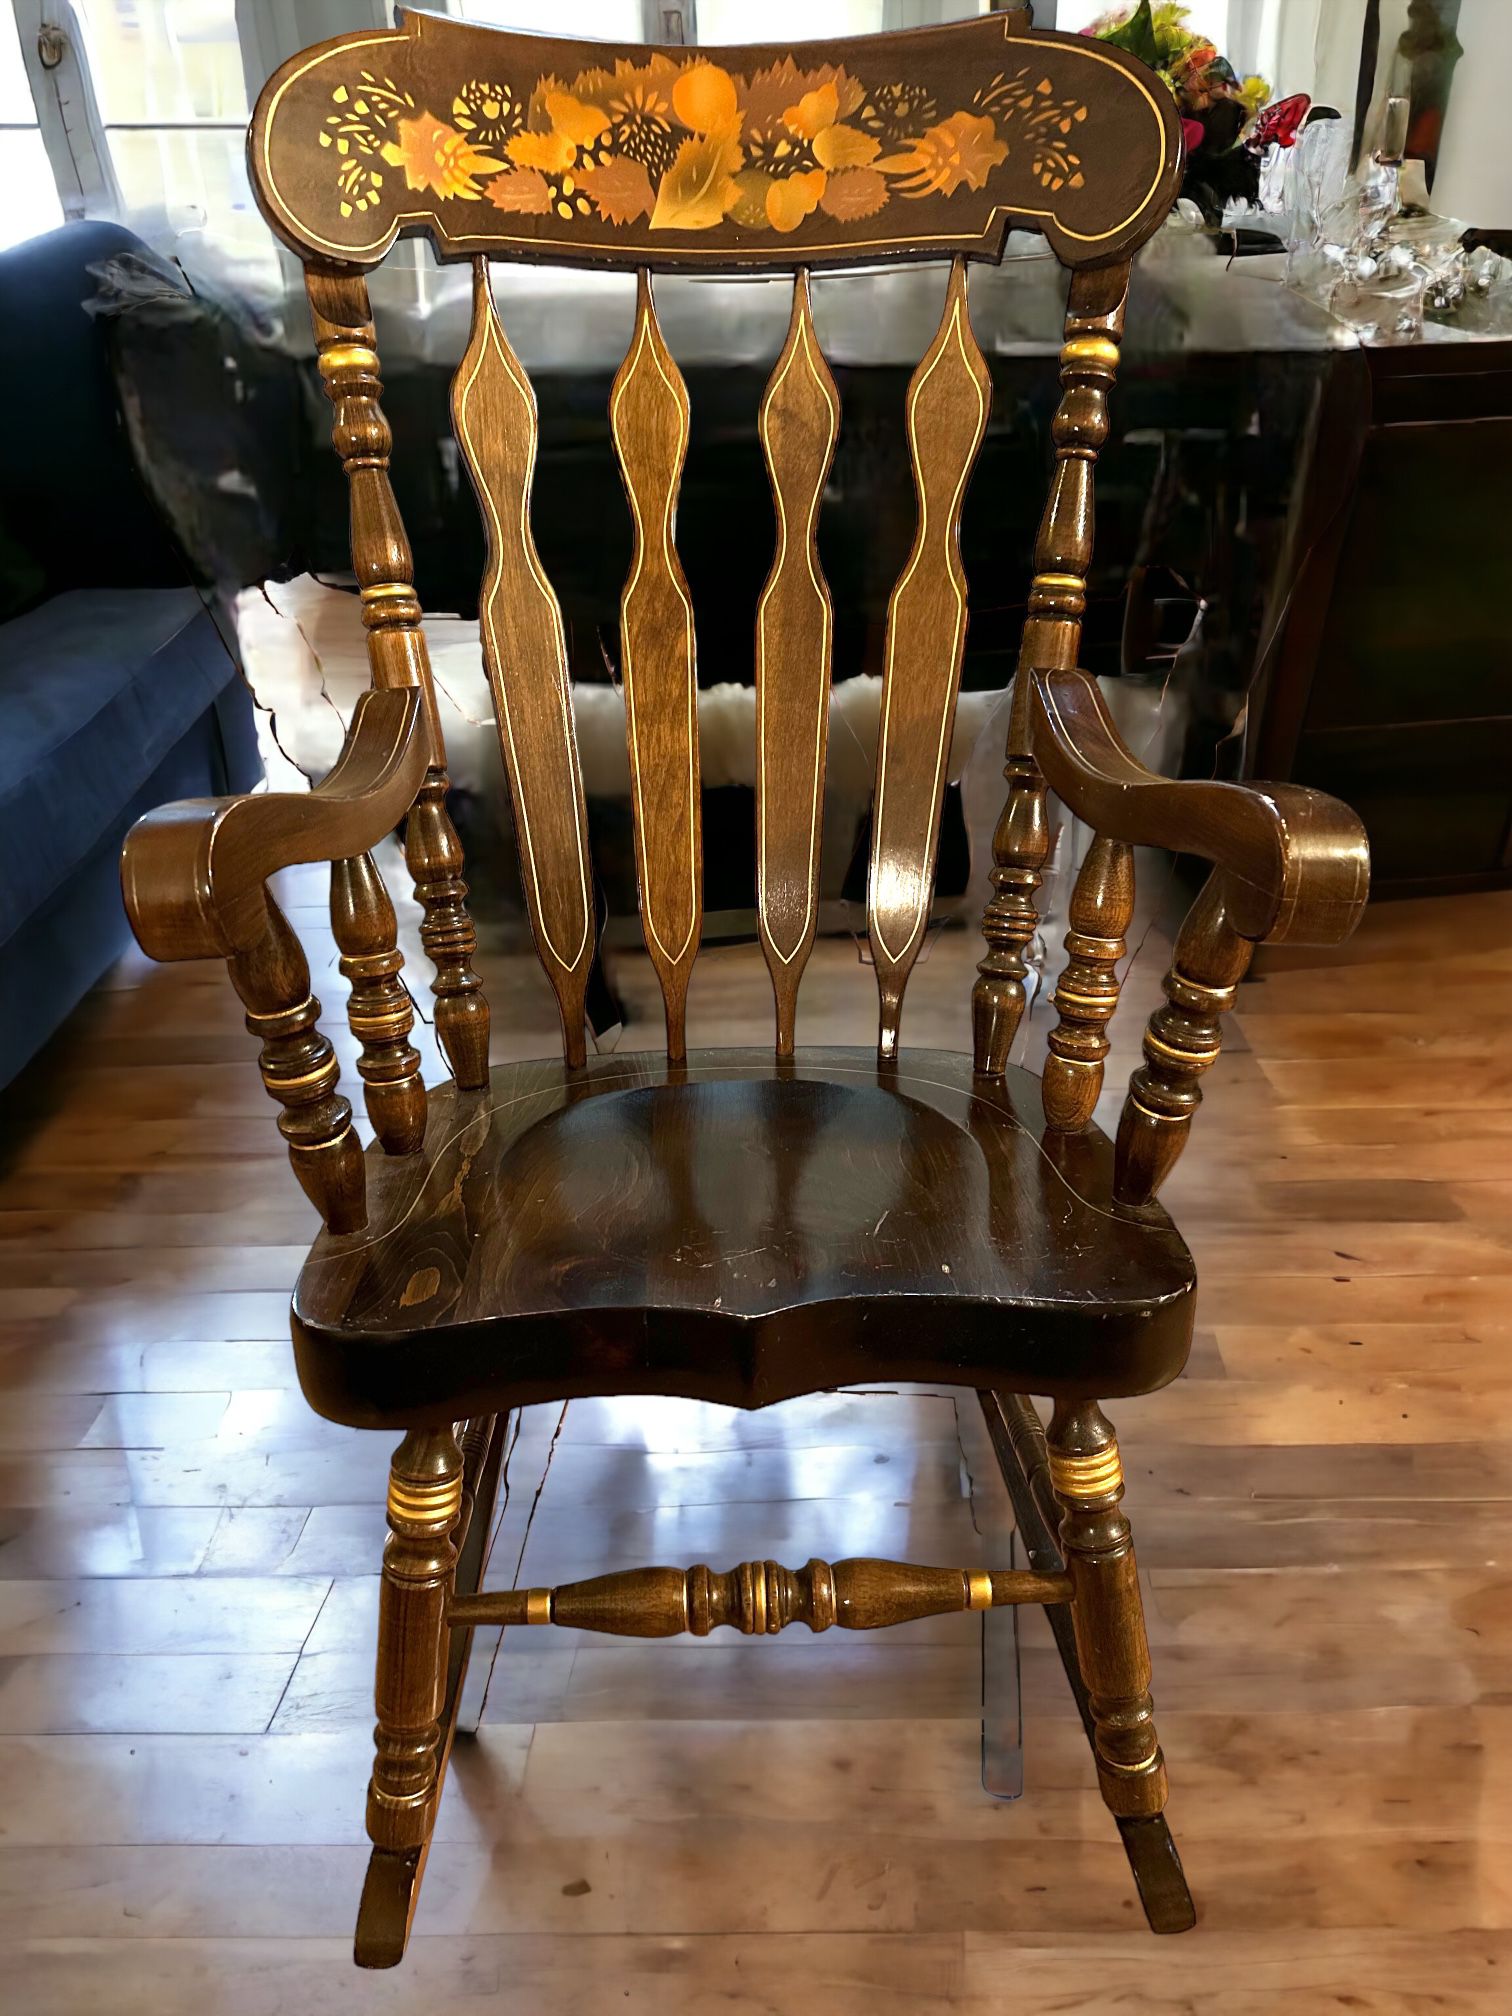 Vintage solid wood rocking chair